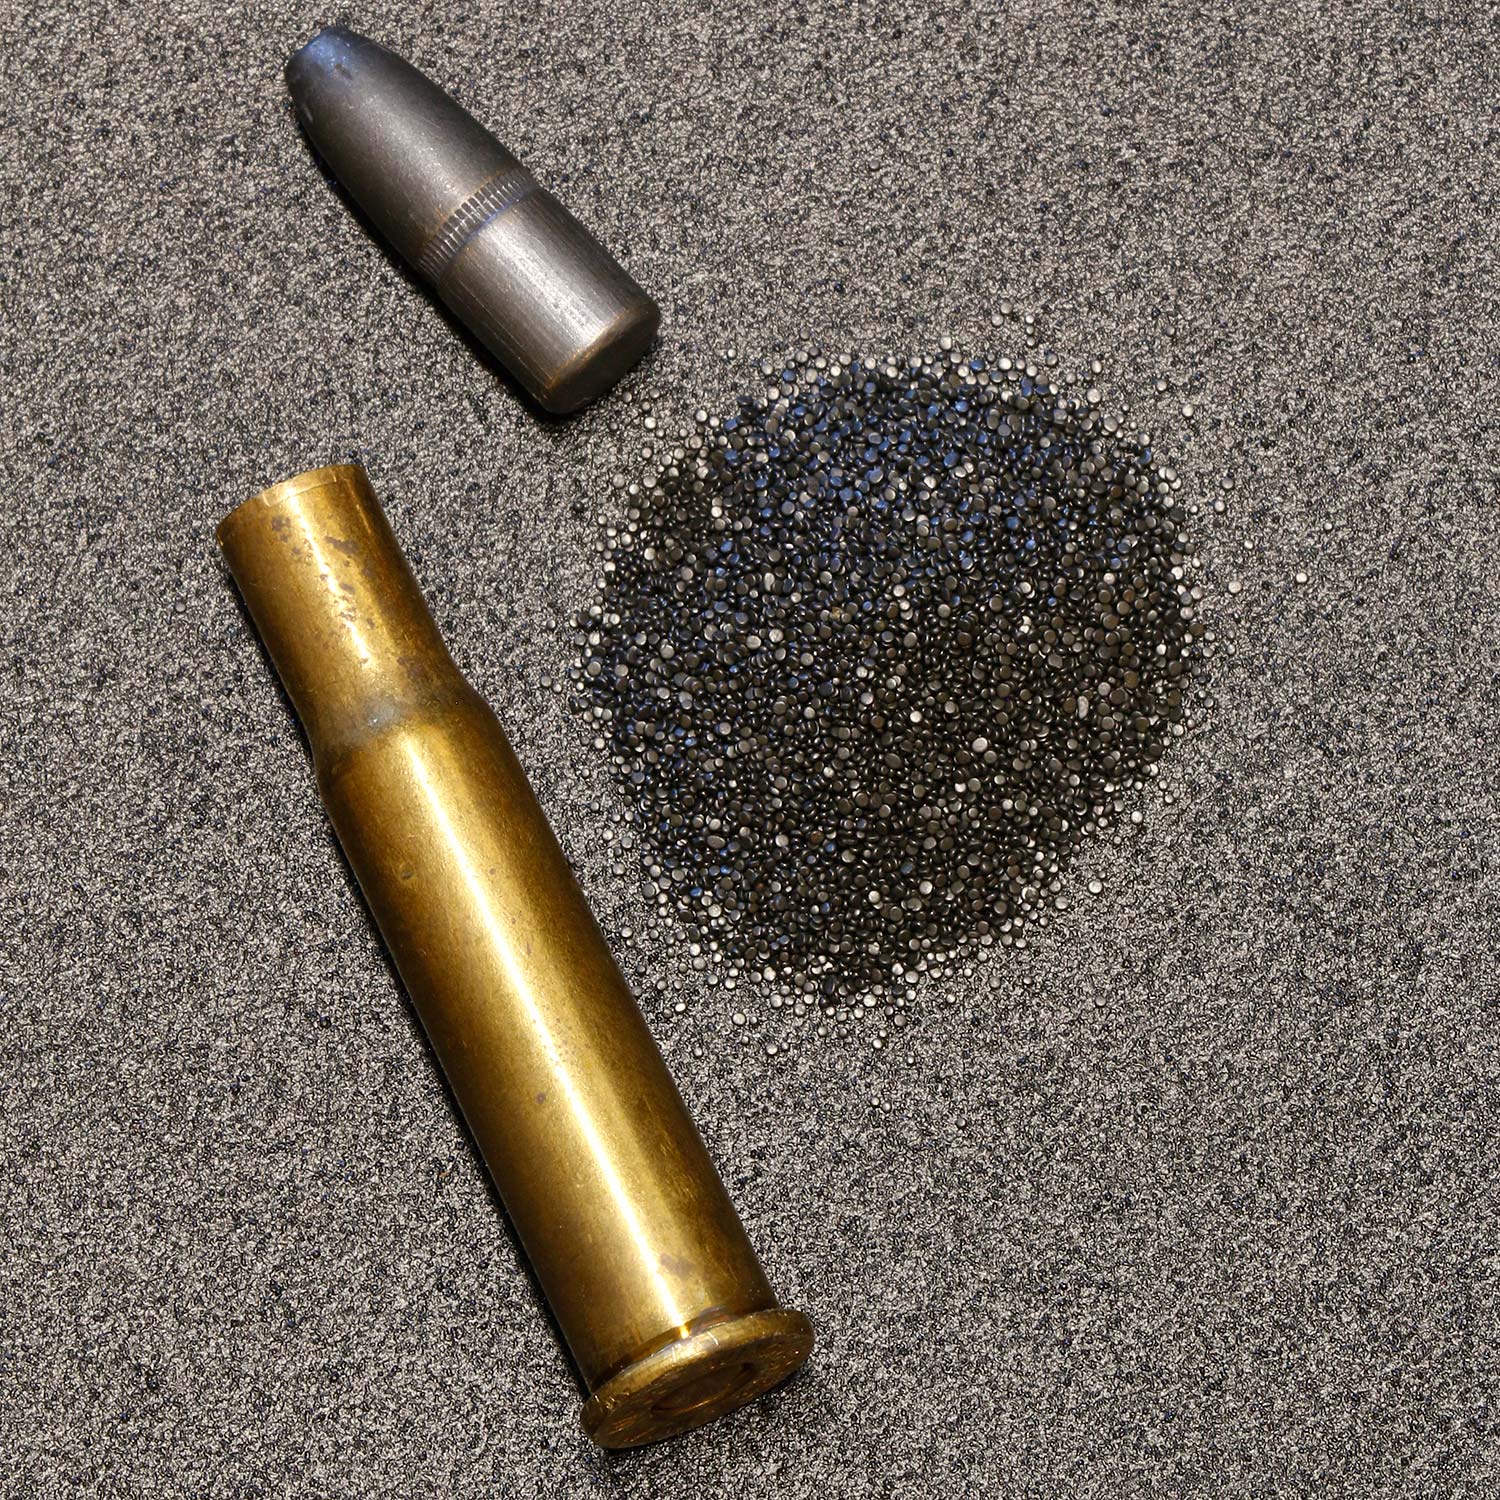 gunpowder in a rifle ammo.